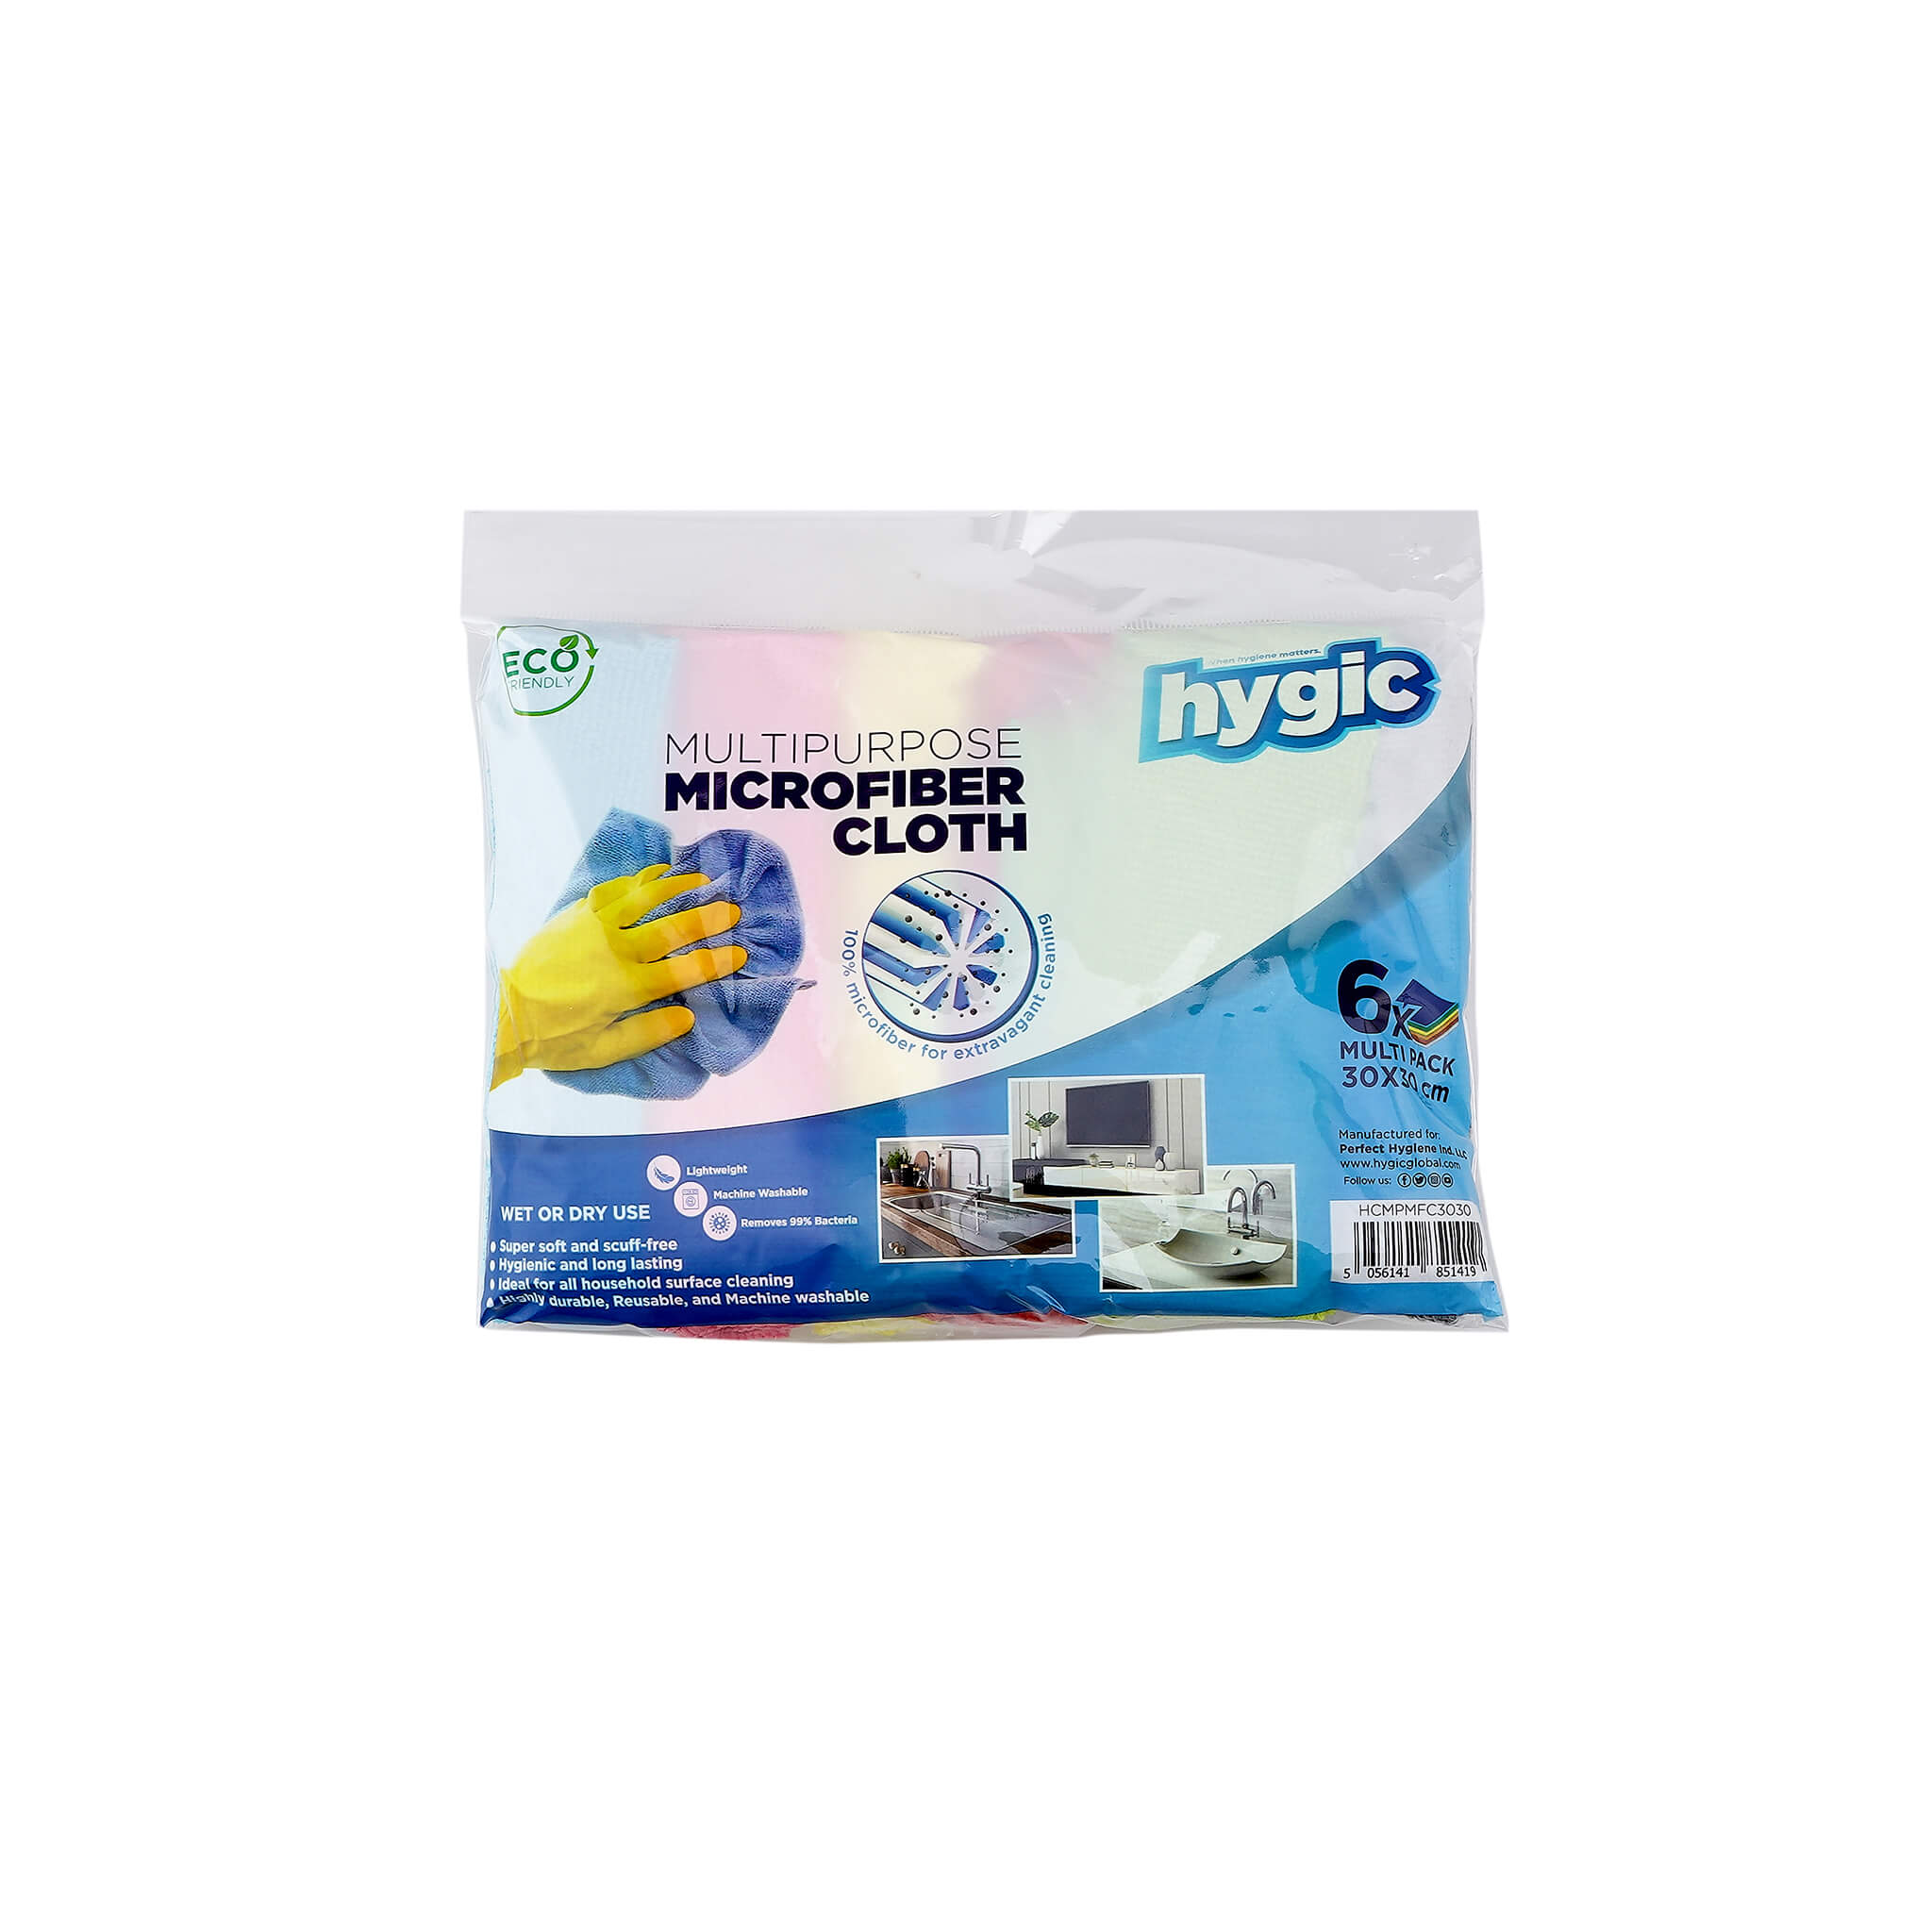 Hygic Multipurpose Microfiber Cloth - hotpackwebstore.com